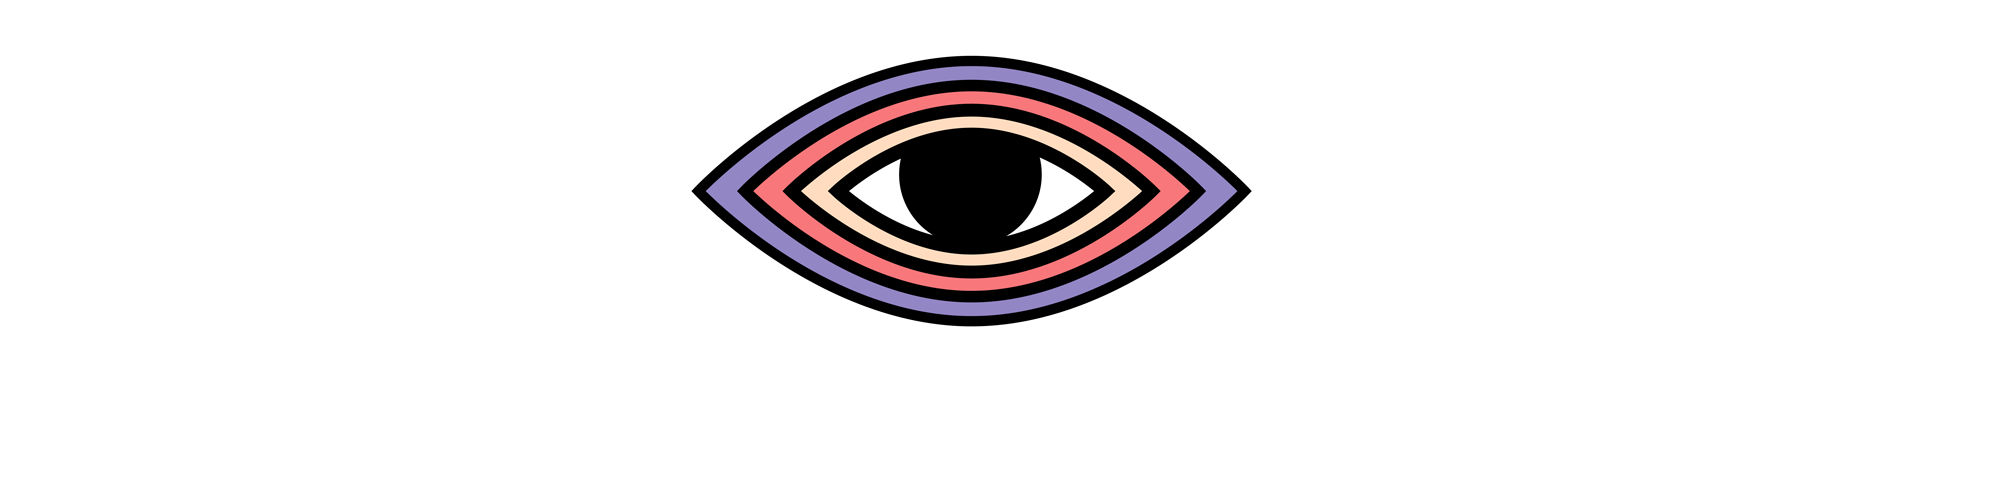 Illustration of an eye looking around